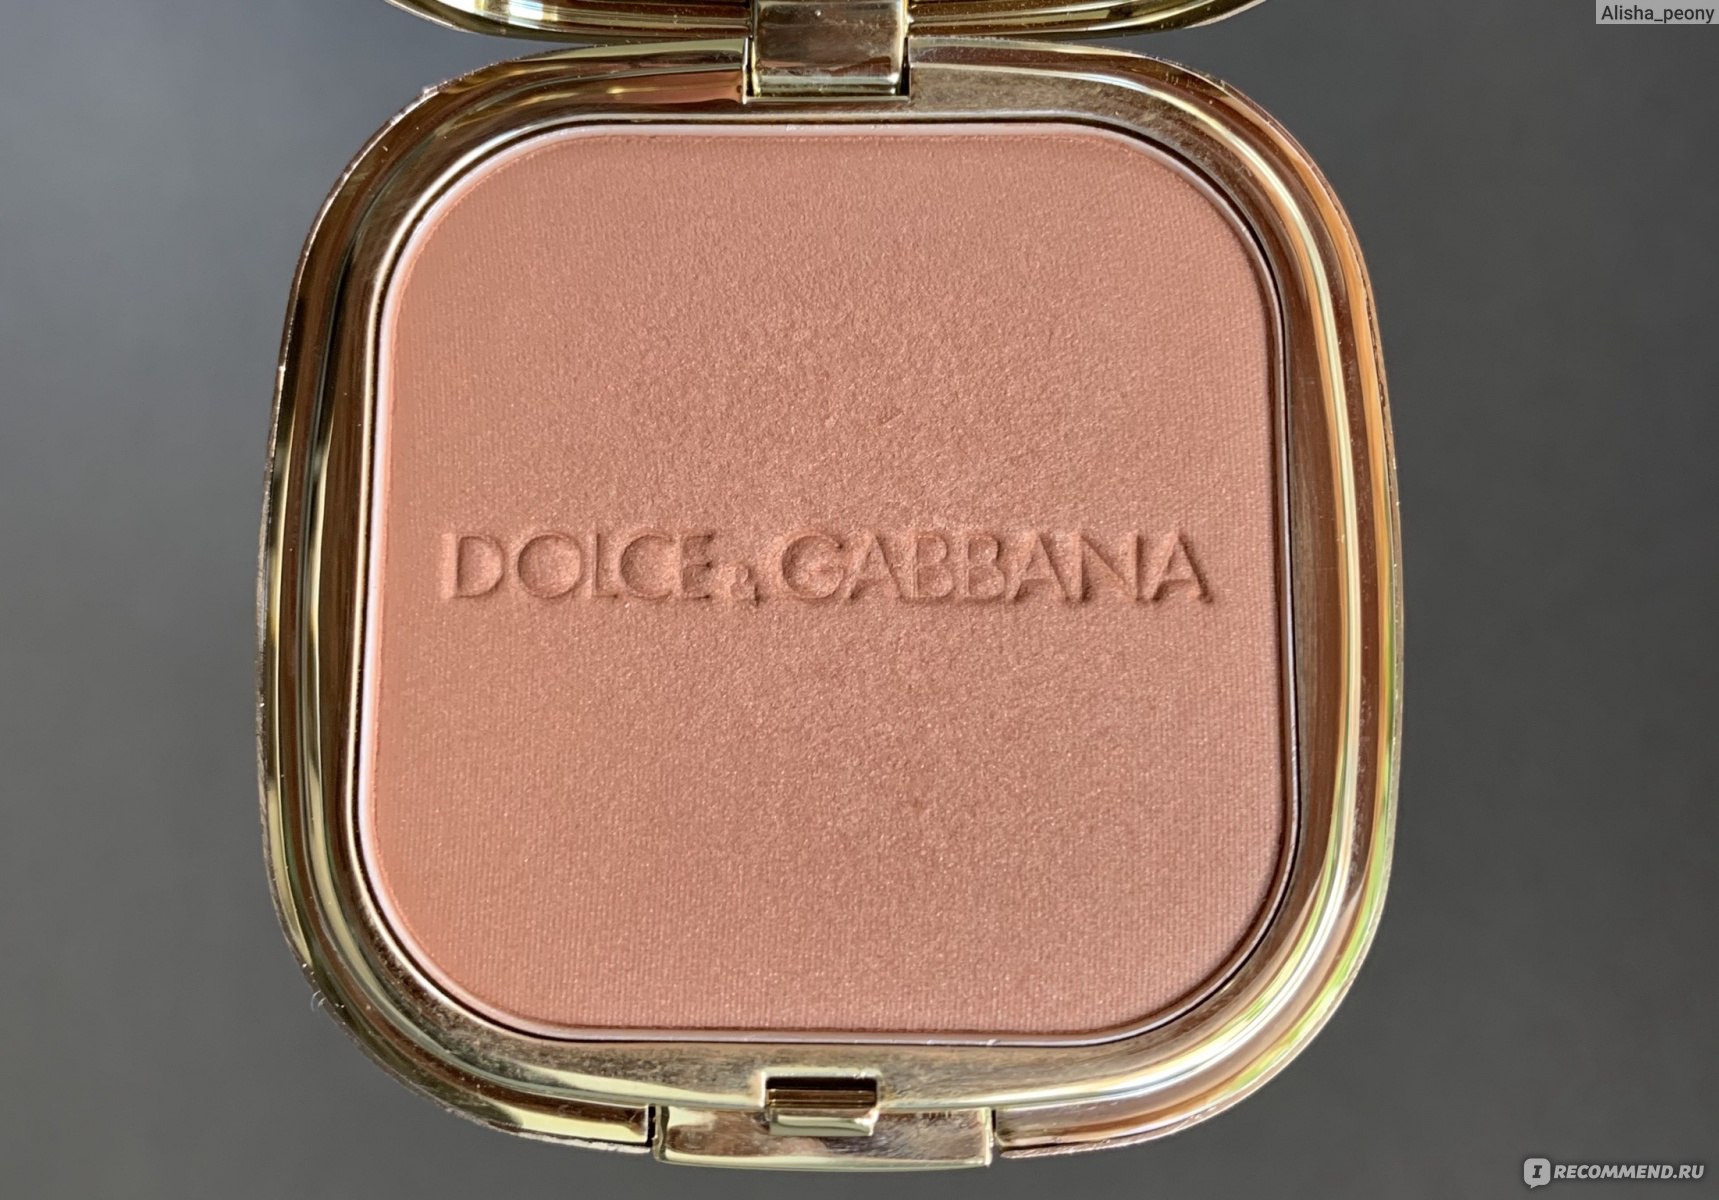 Пудра дольче габбана. Дольче Габбана Солар Глоу бронзер. Dolce Gabbana бронзер. Dolce Gabbana Solar Glow Ultra-Light Bronzing Powder 20-Sand. Бронзирующая пудра Solar Glow, Dolce Gabbana.